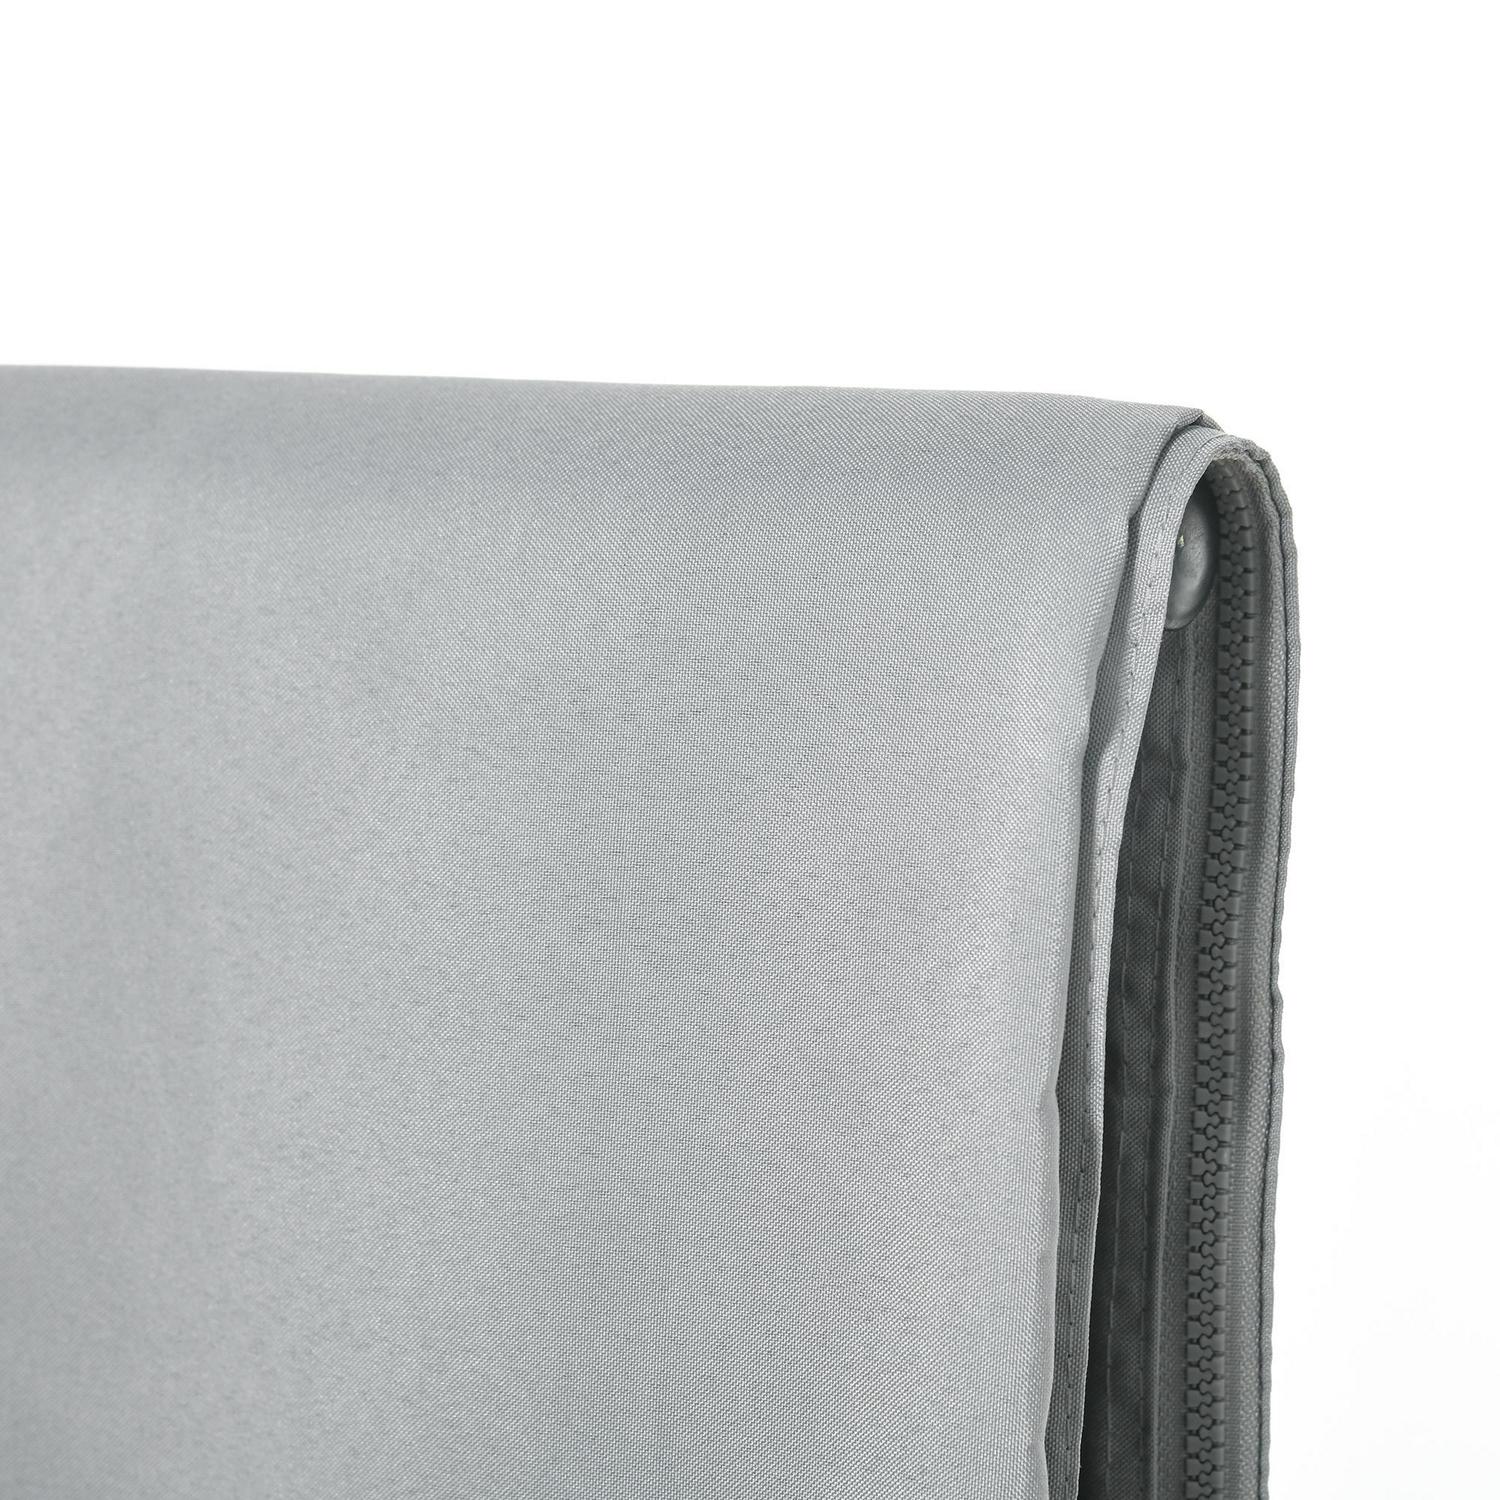 4 Pack Universal Gazebo Replacement Sidewalls Privacy Panel - Light Grey